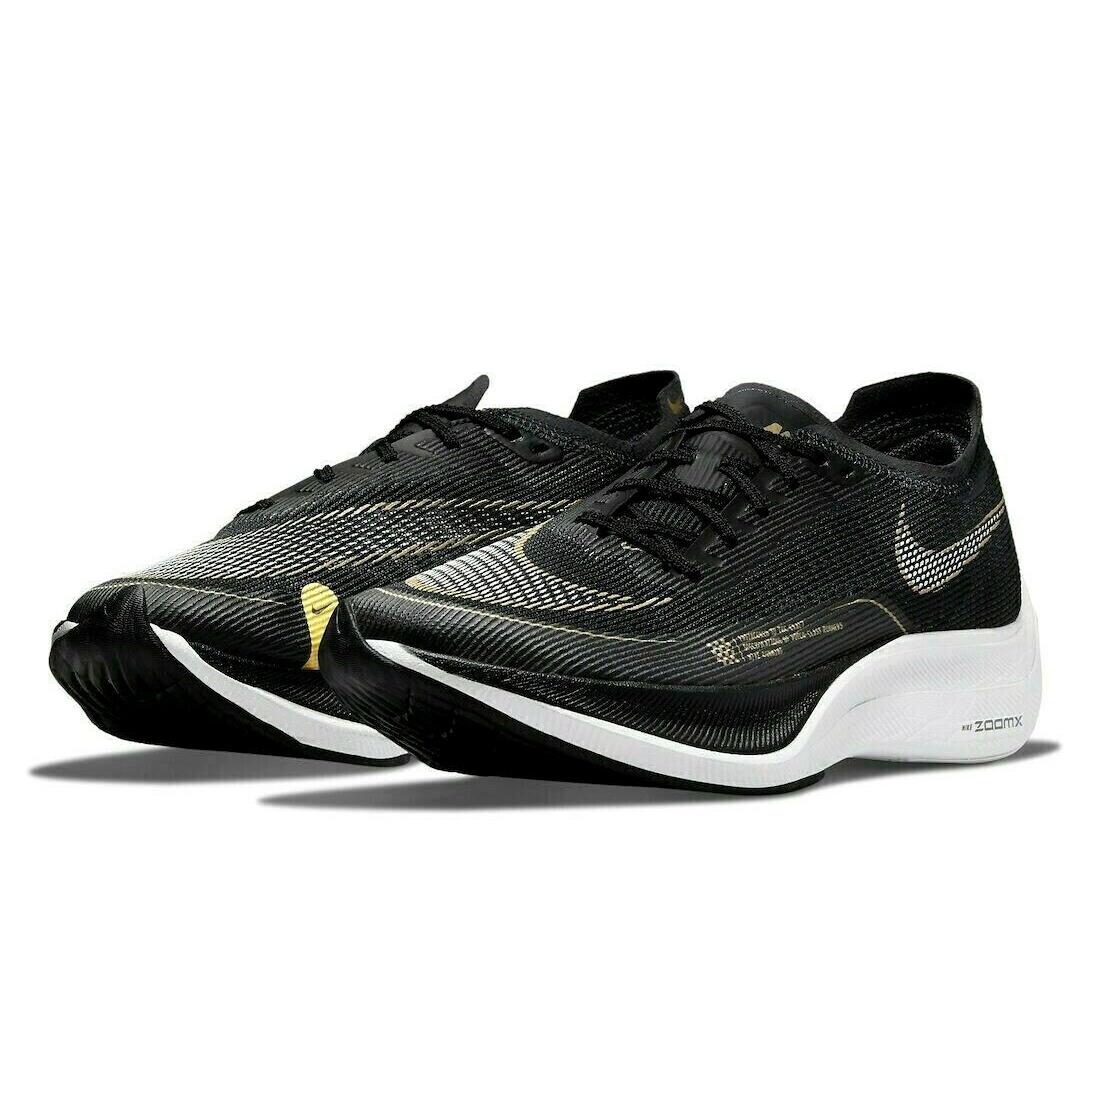 Nike Zoomx Vaporfly Next% 2 Womens Size 8.5 Sneaker Shoes CU4123 001 Black